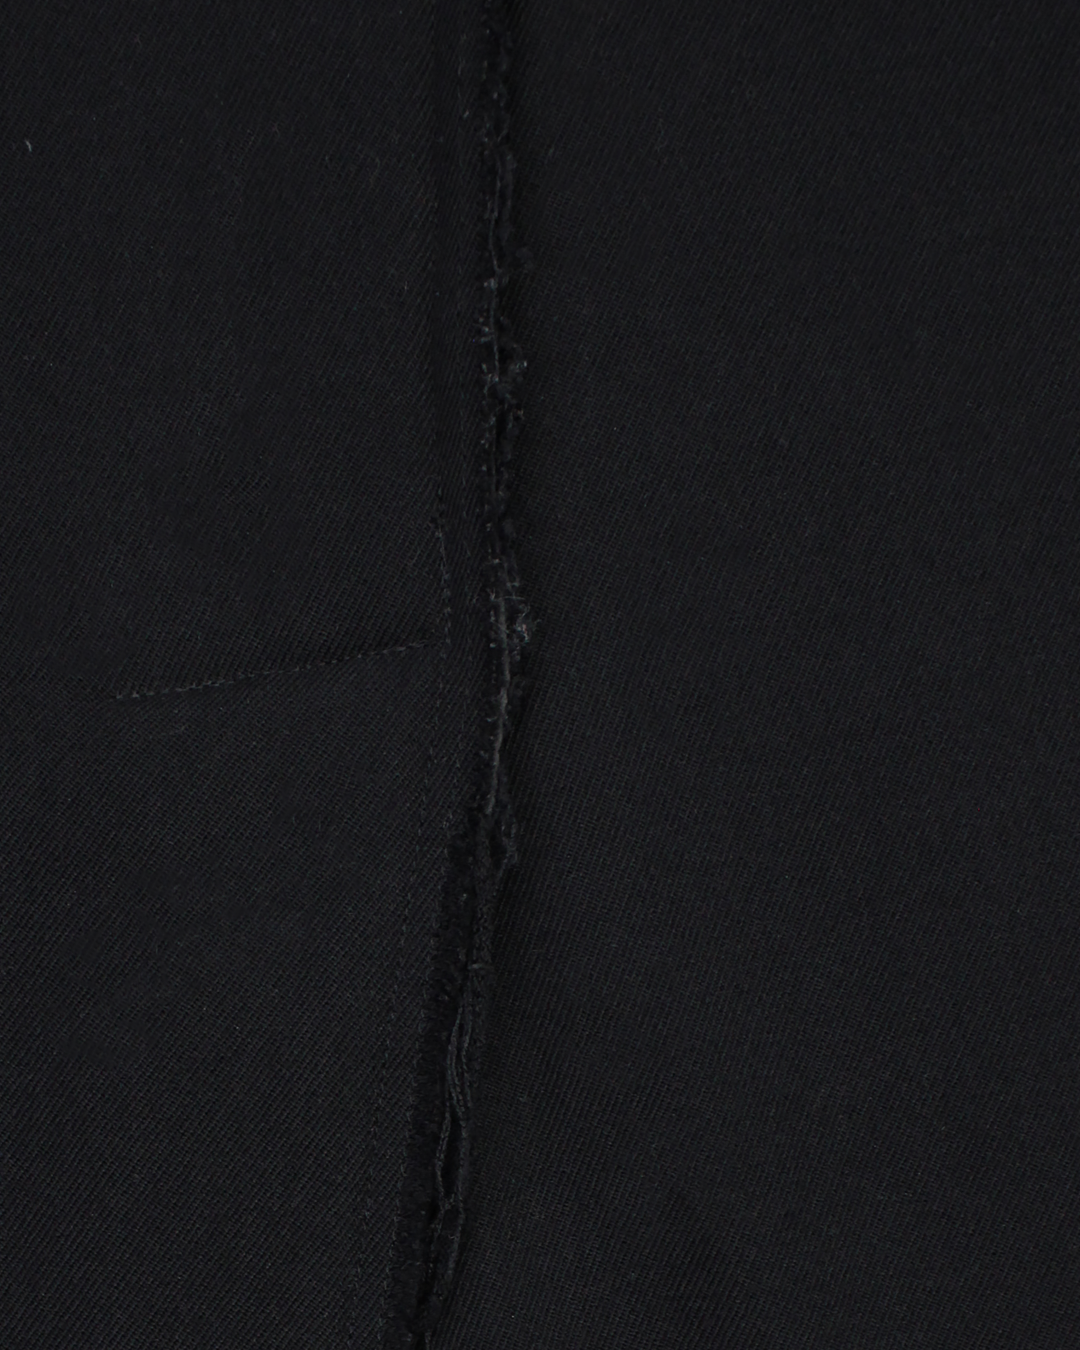 Distressed Coat (FW02)